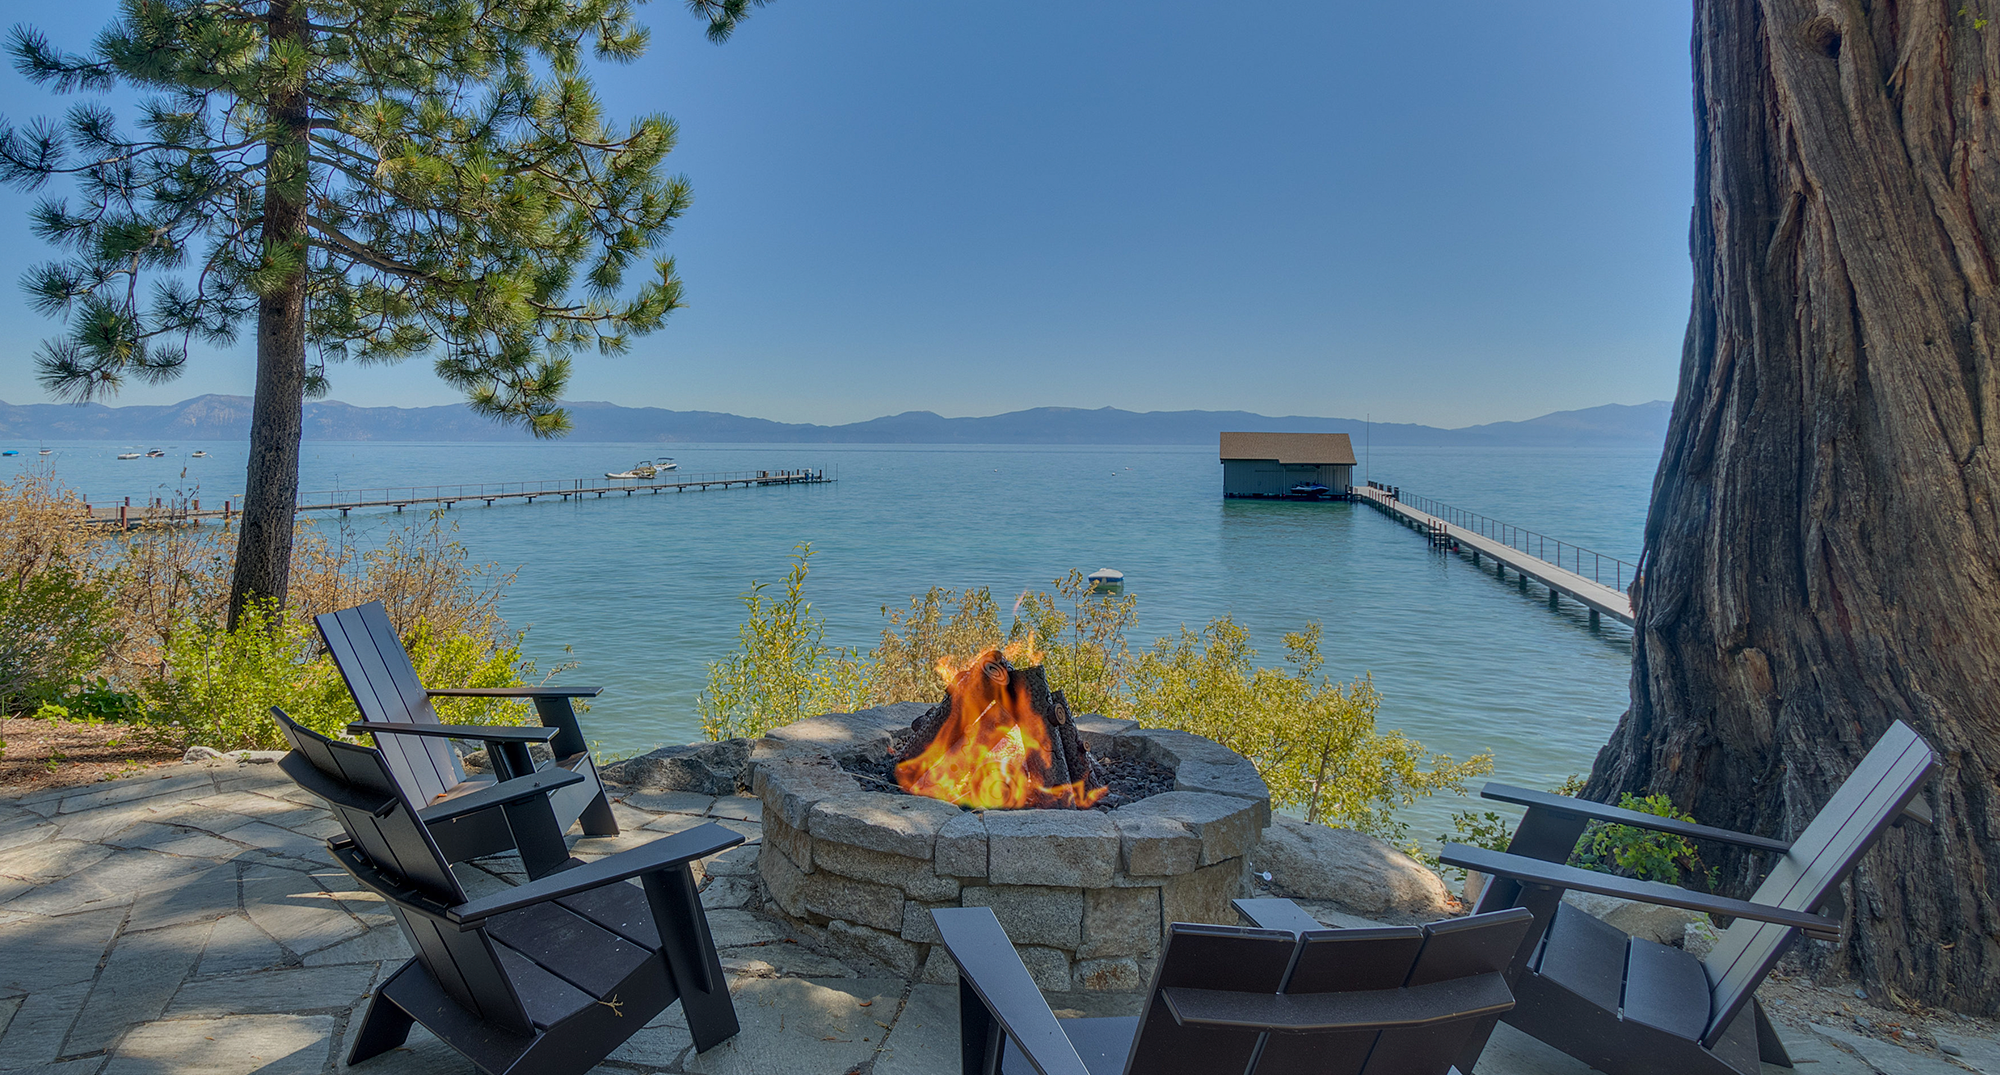 Luxury Lake Tahoe Real Estate Amie Quirarte